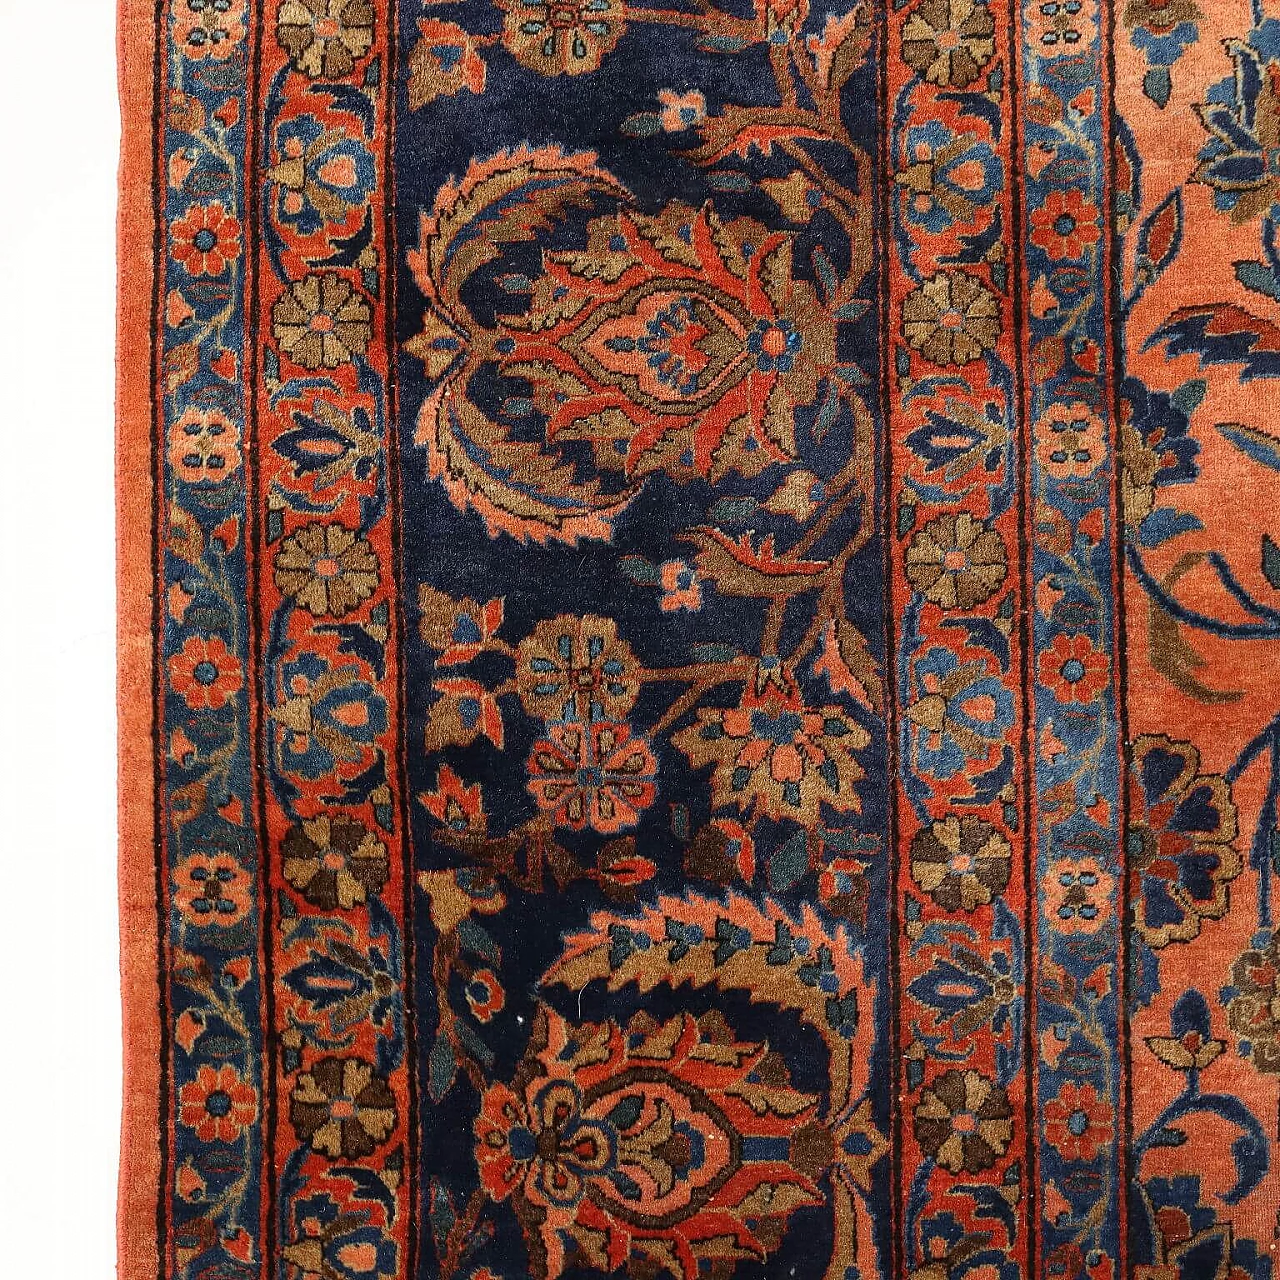 Iranian Keshan Manchester cotton and wool carpet 6